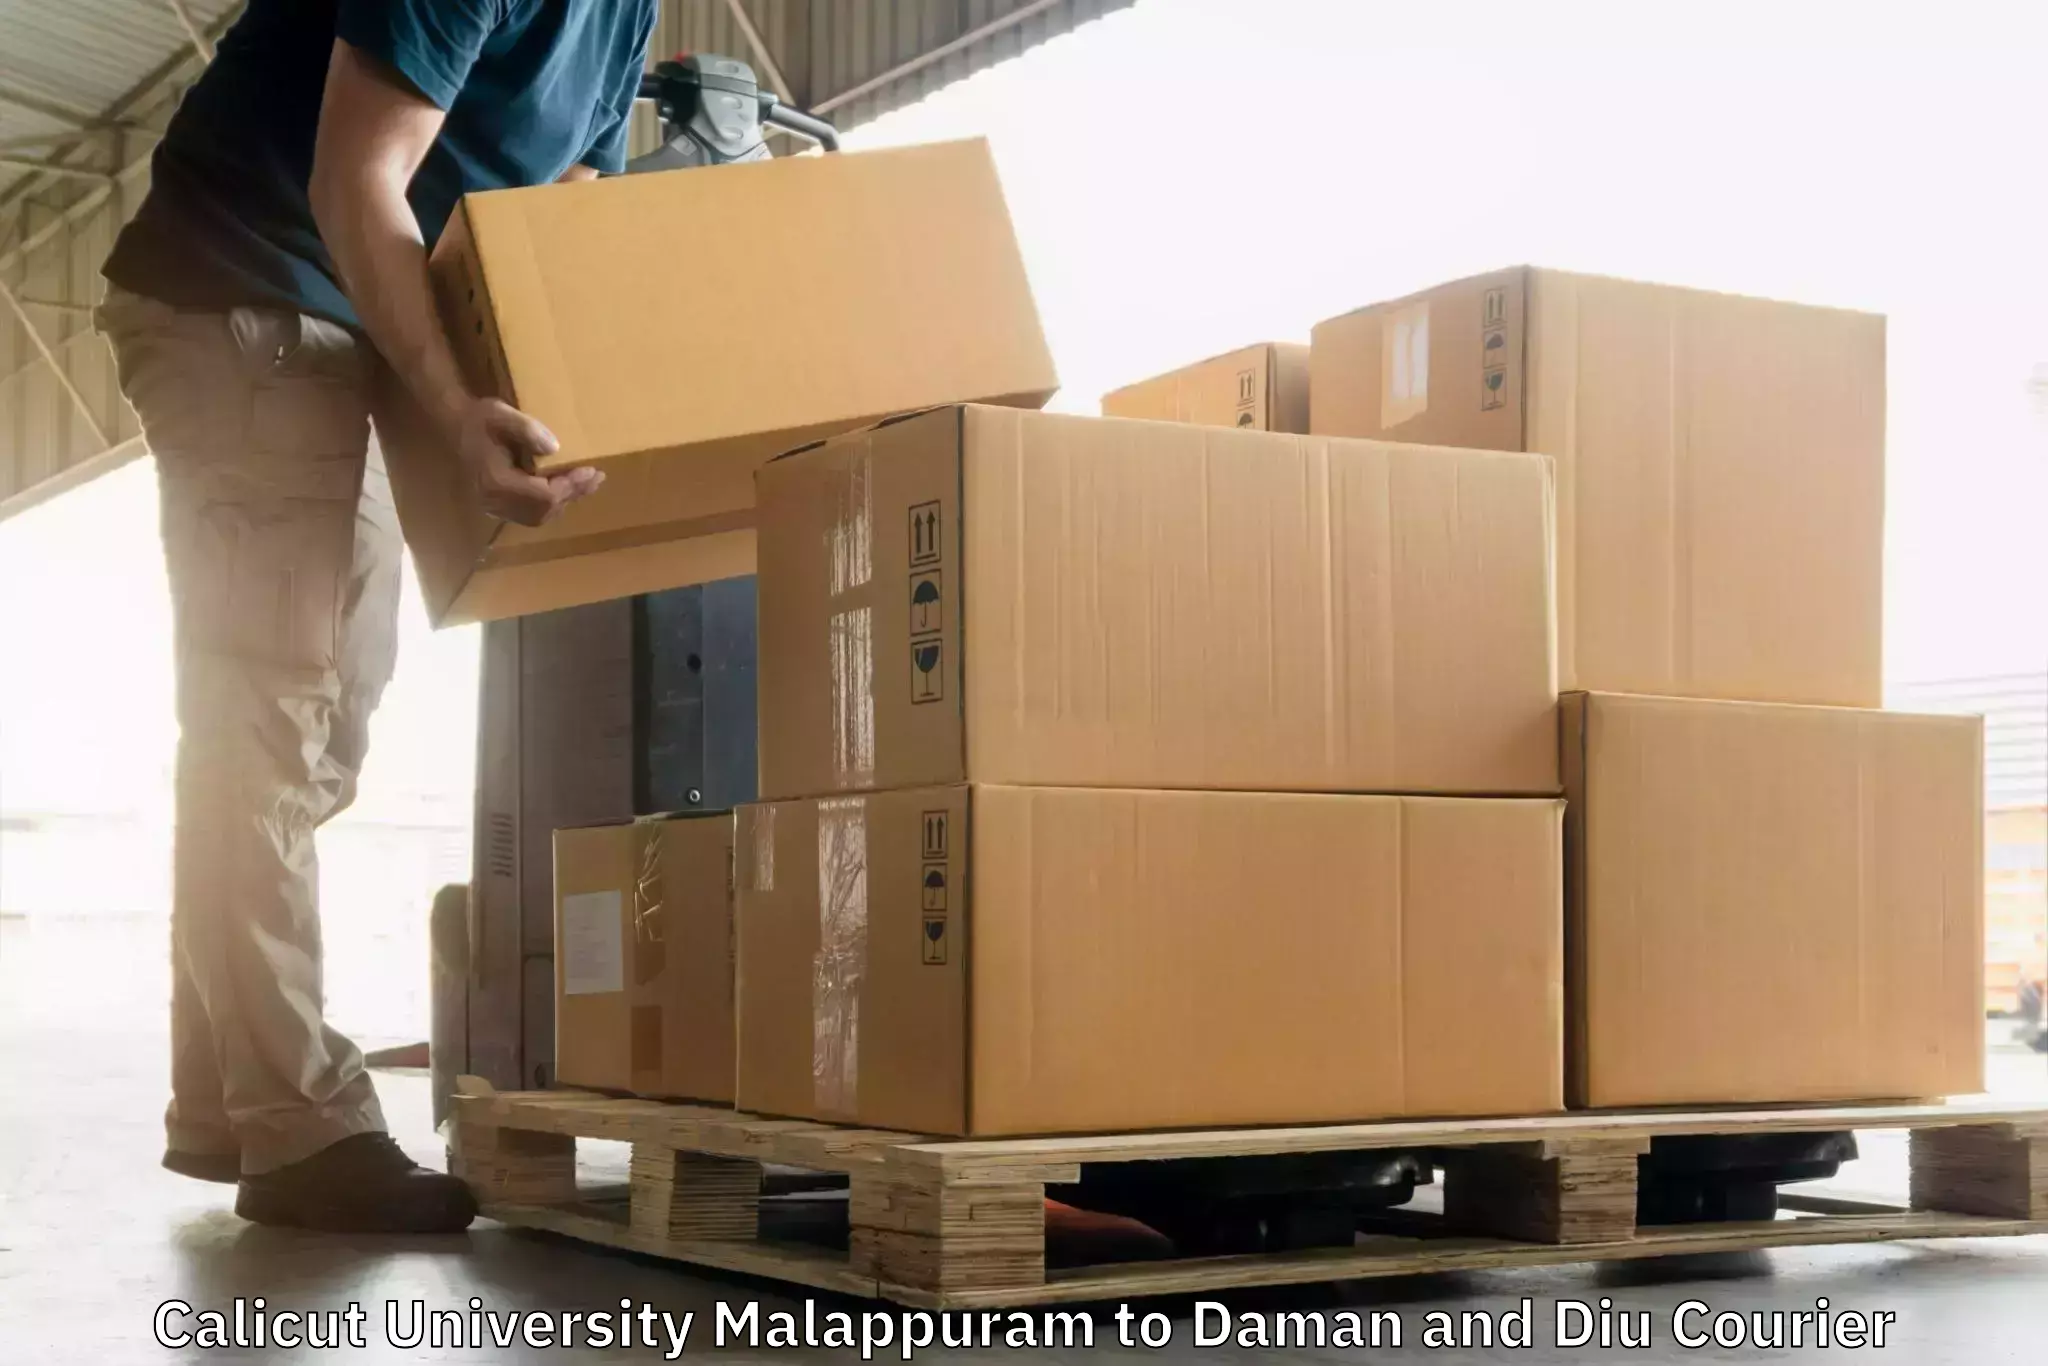 Streamlined delivery processes Calicut University Malappuram to Diu